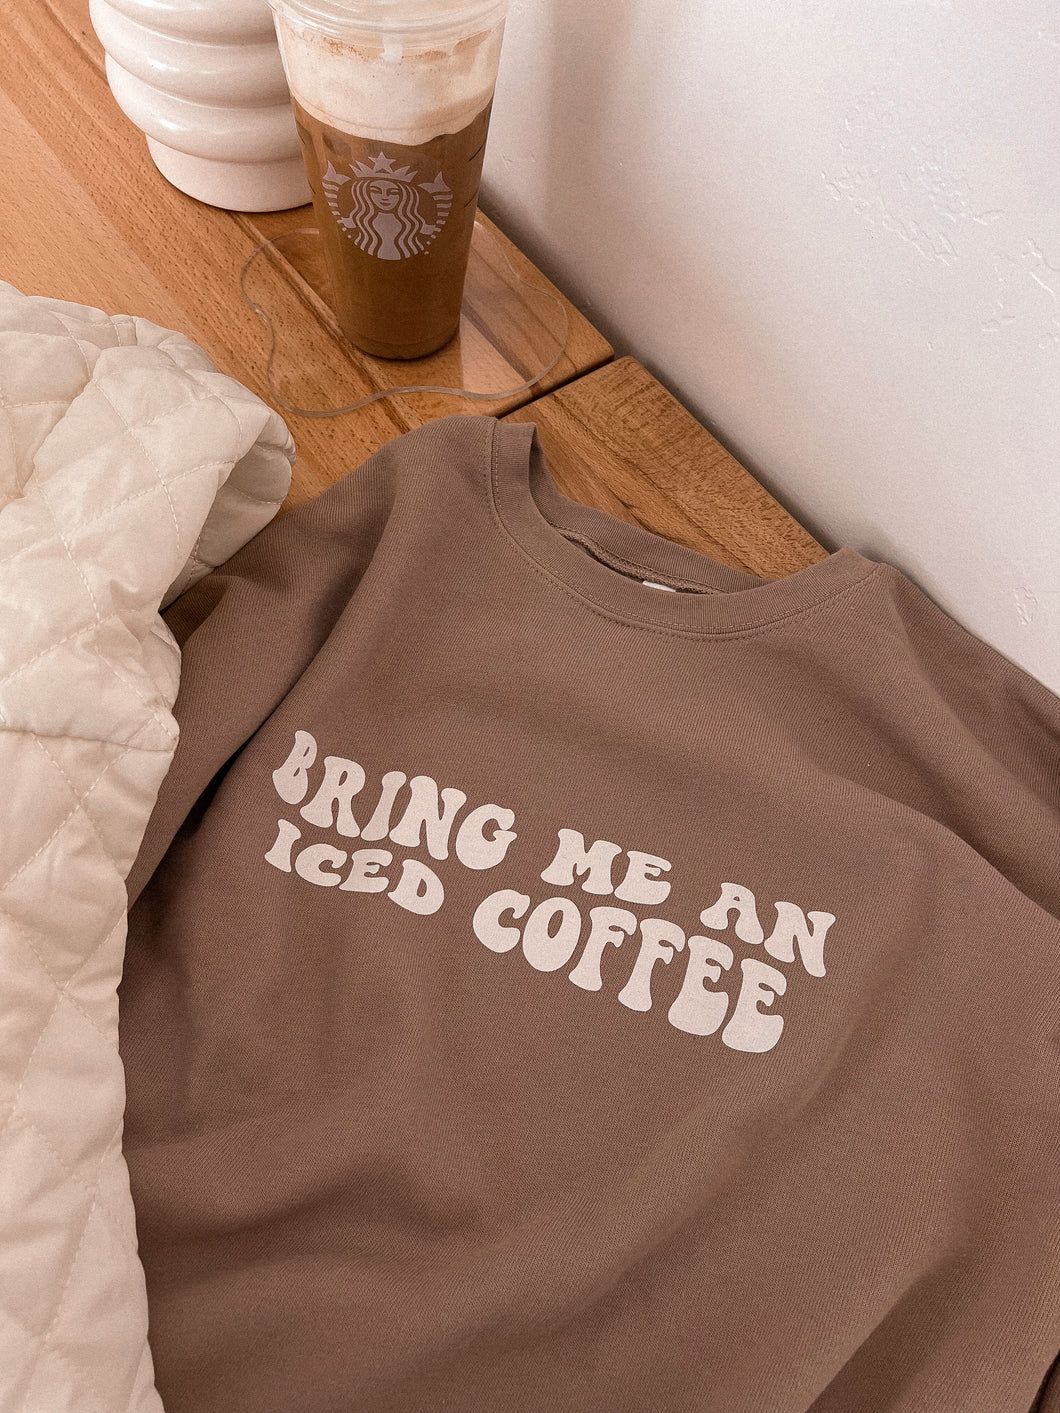 Bring me an iced coffee crewneck sweatshirt (S-2X)